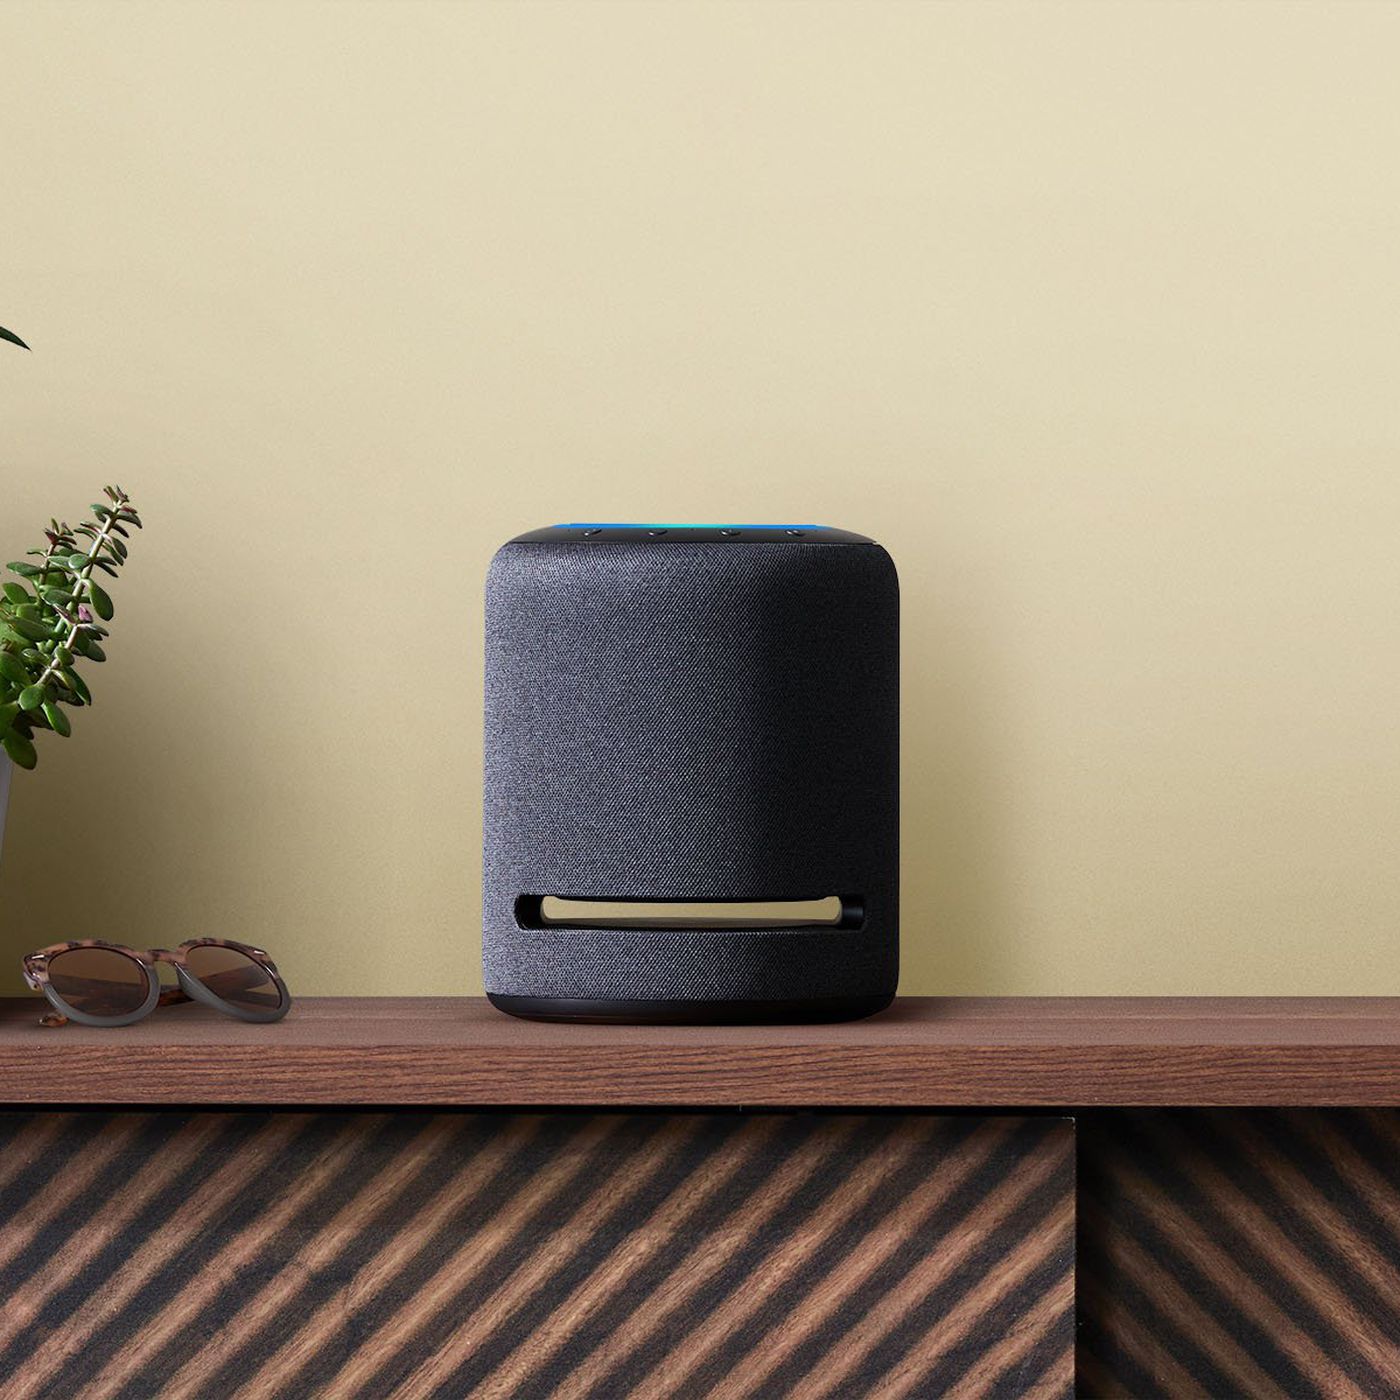 Amazon Echo Studio Smart Speaker Review